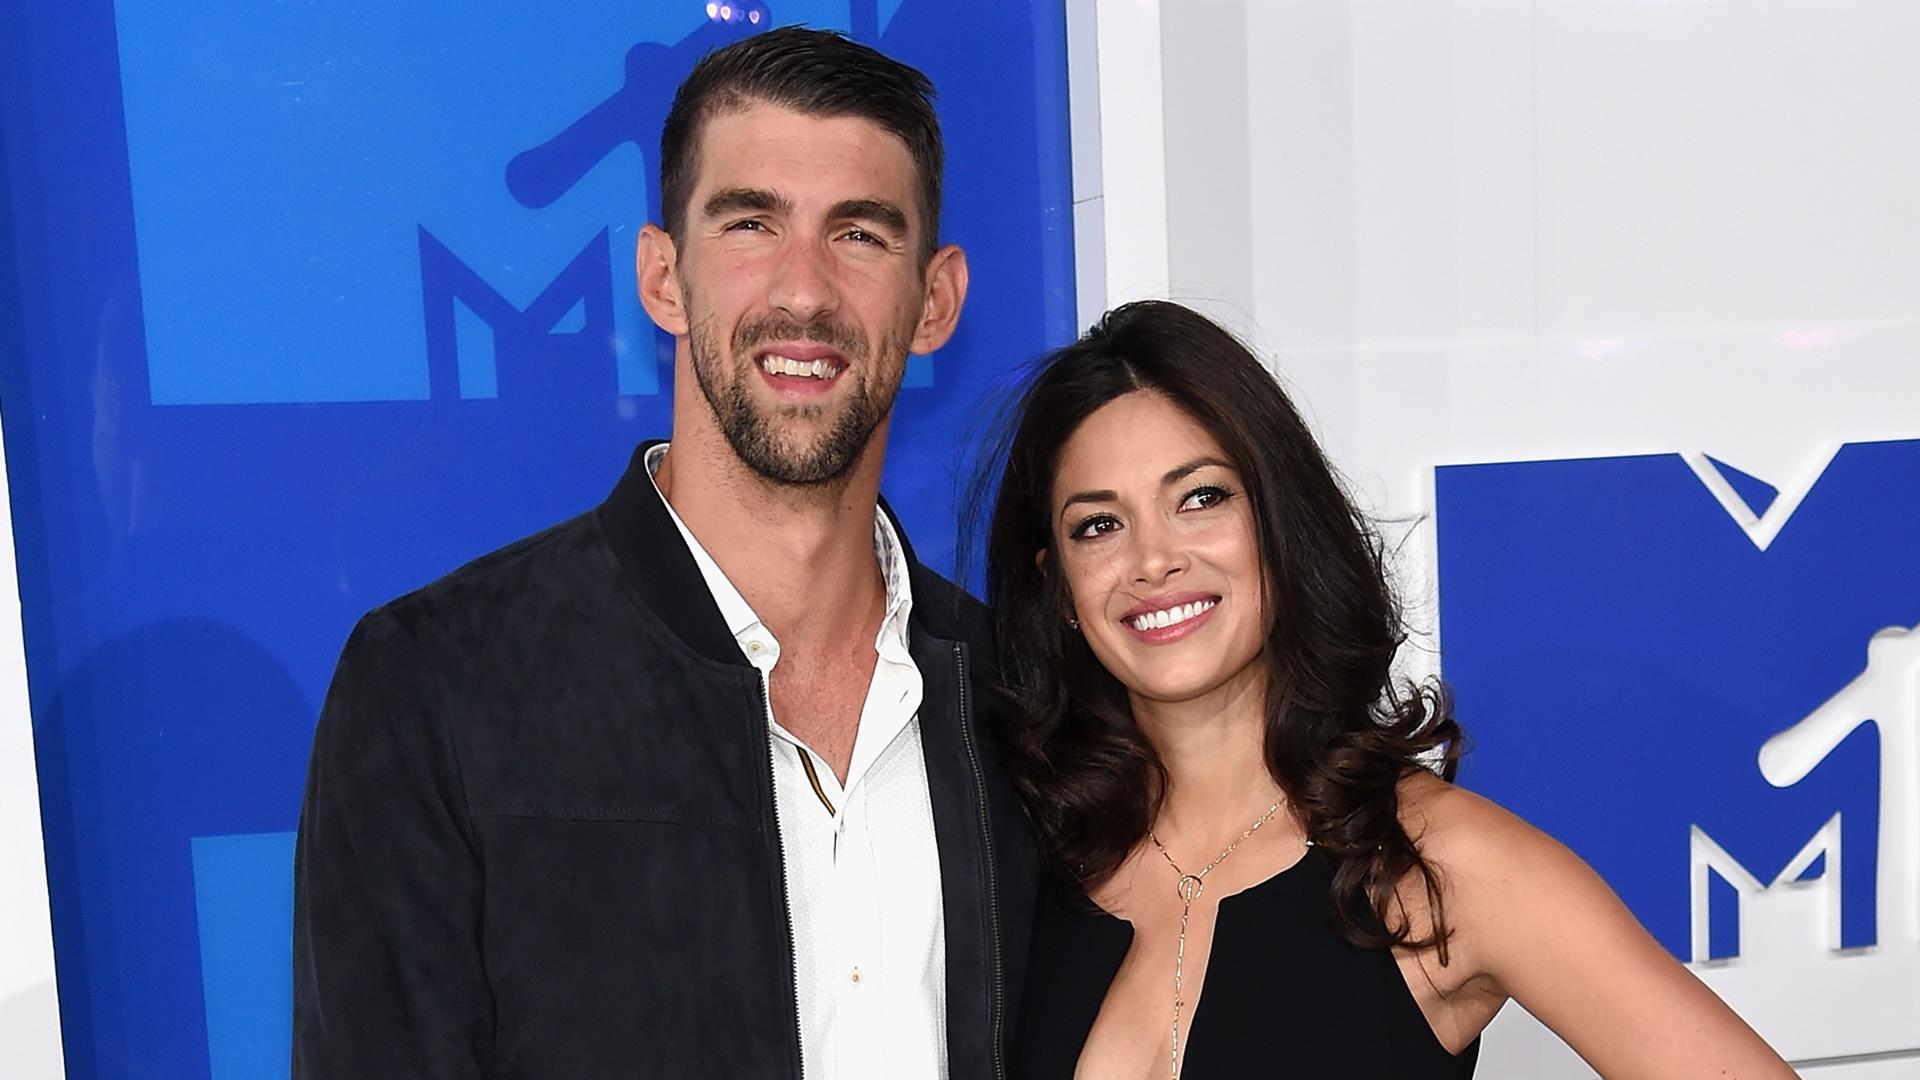 Michael Phelps secretly married Nicole Johnson months ago!